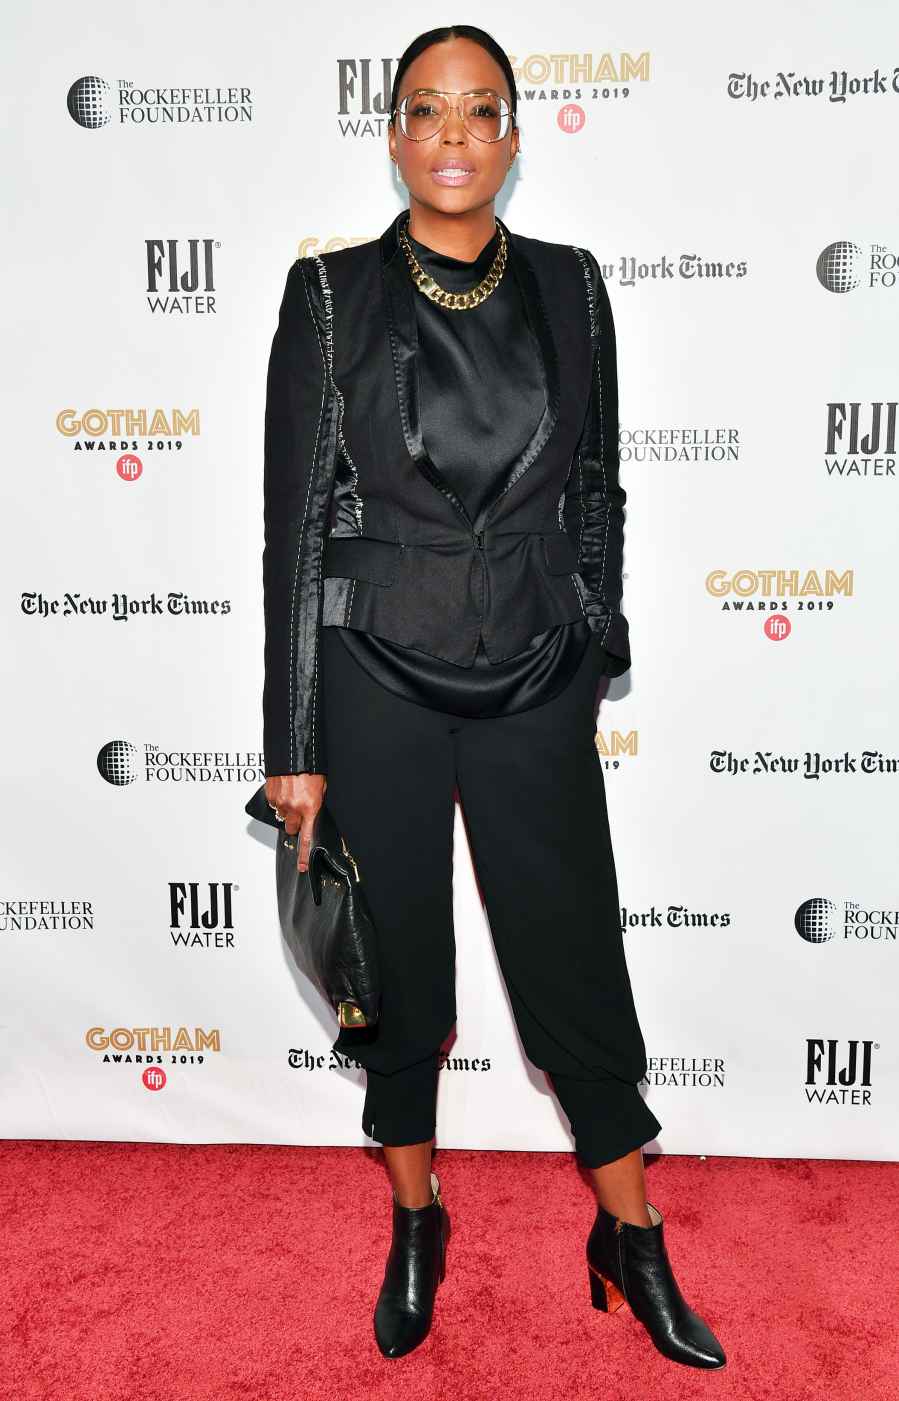 Gotham Film Awards Red Carpet - Aisha Tyler